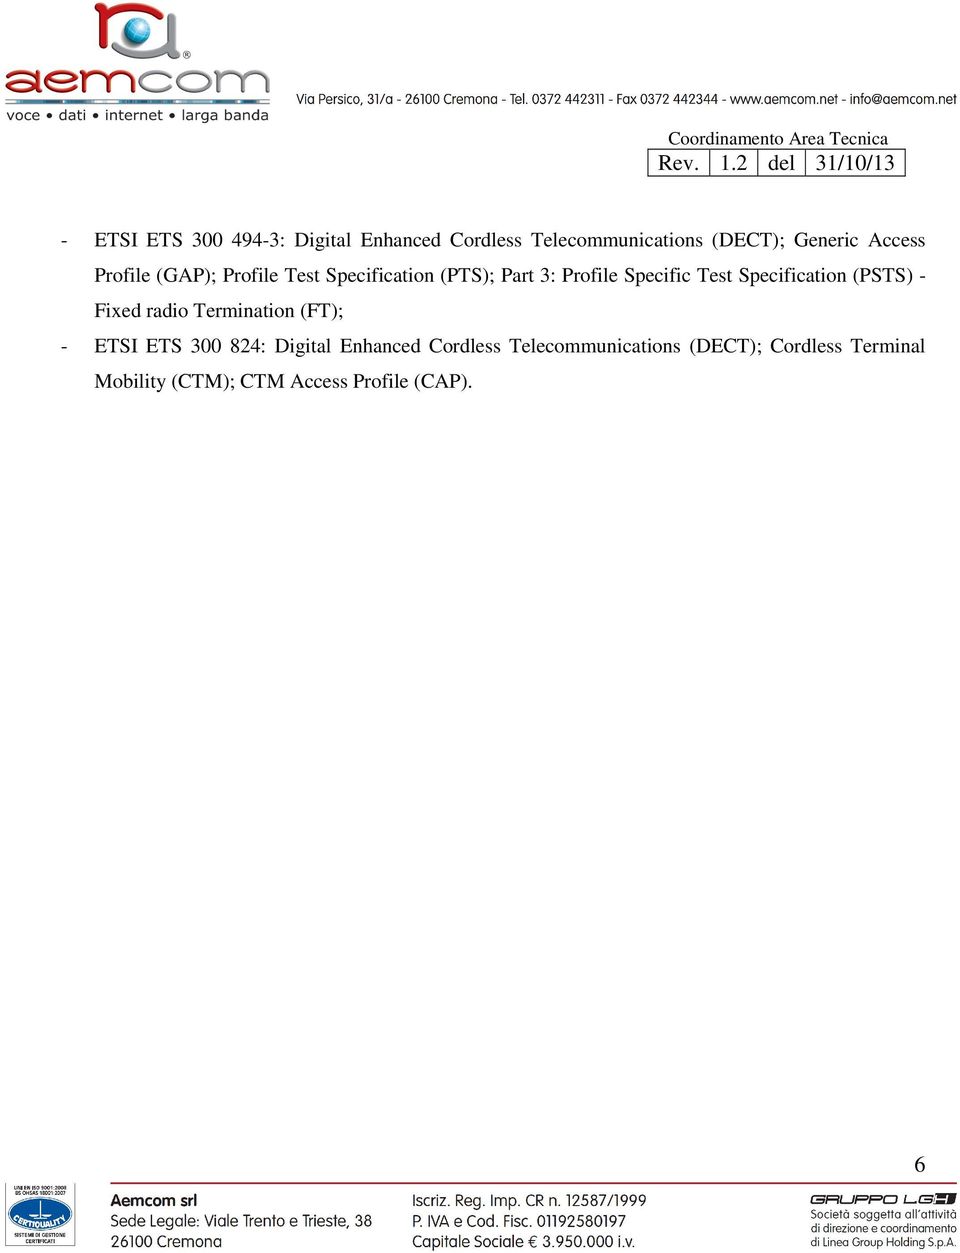 Specification (PSTS) - Fixed radio Termination (FT); - ETSI ETS 300 824: Digital